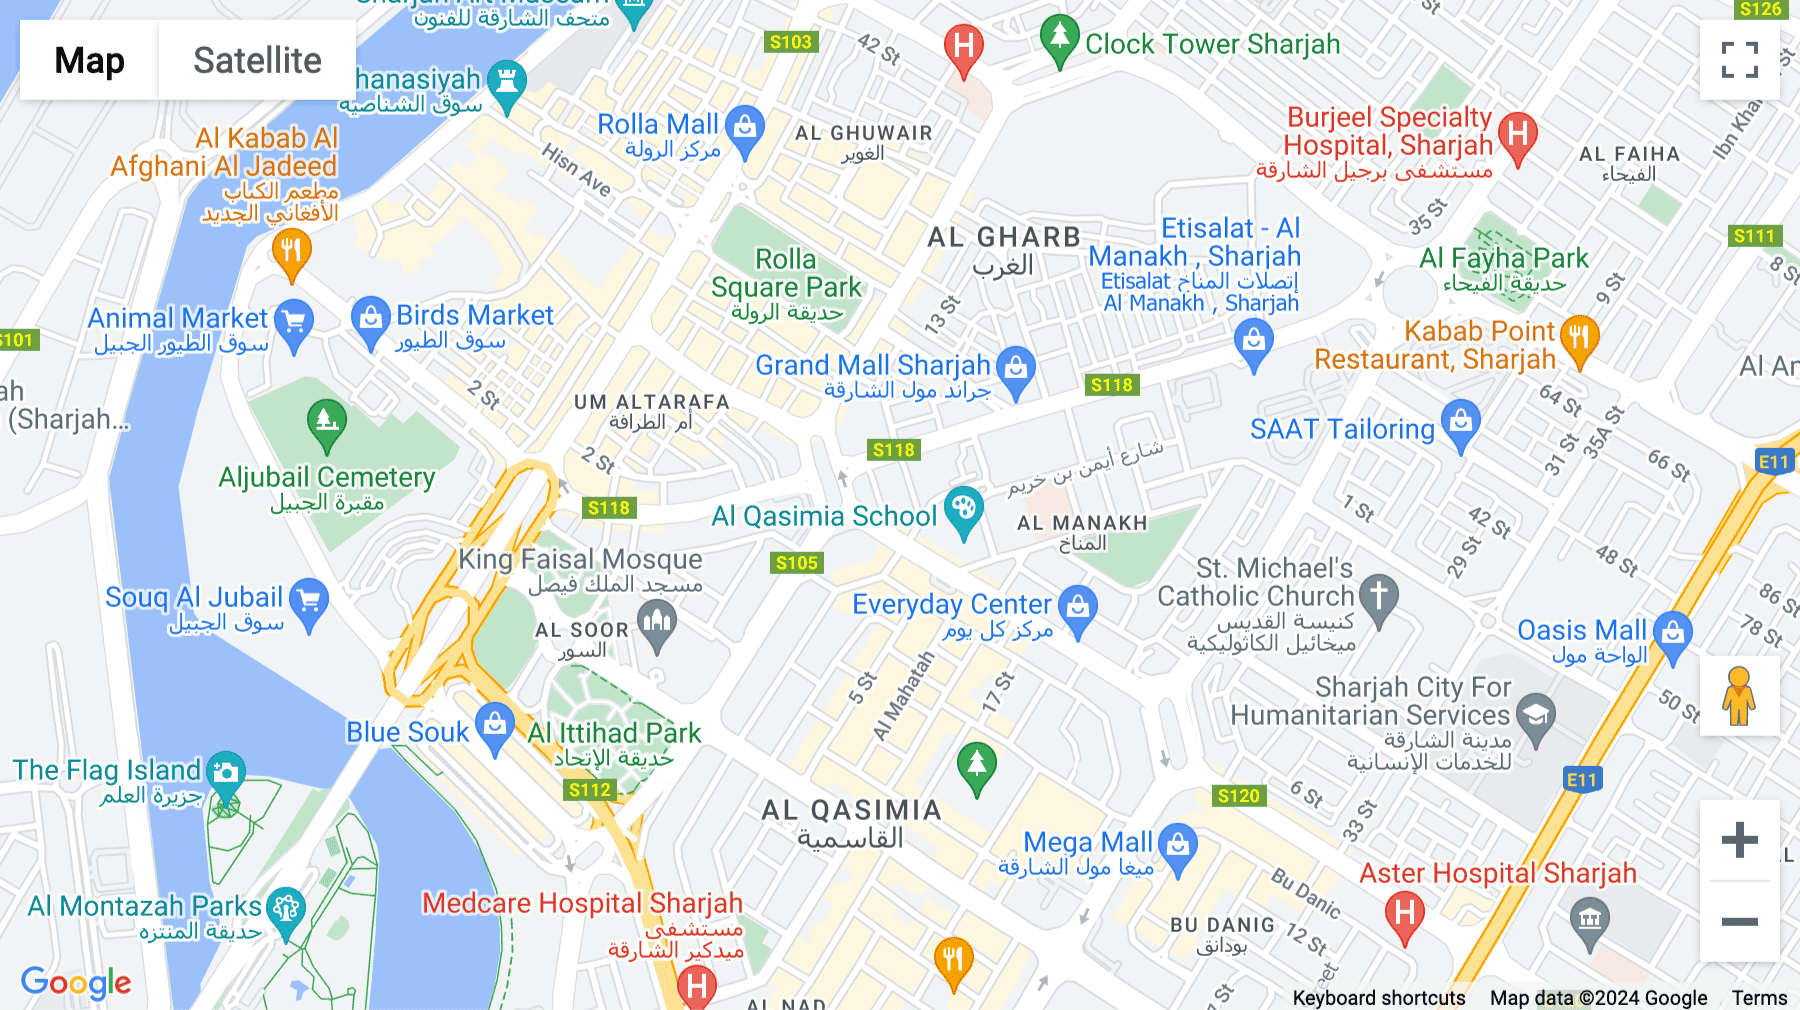 Click for interative map of Megamall Tower Plot 260, Bu Daniq, Al Qassimia, Sharjah